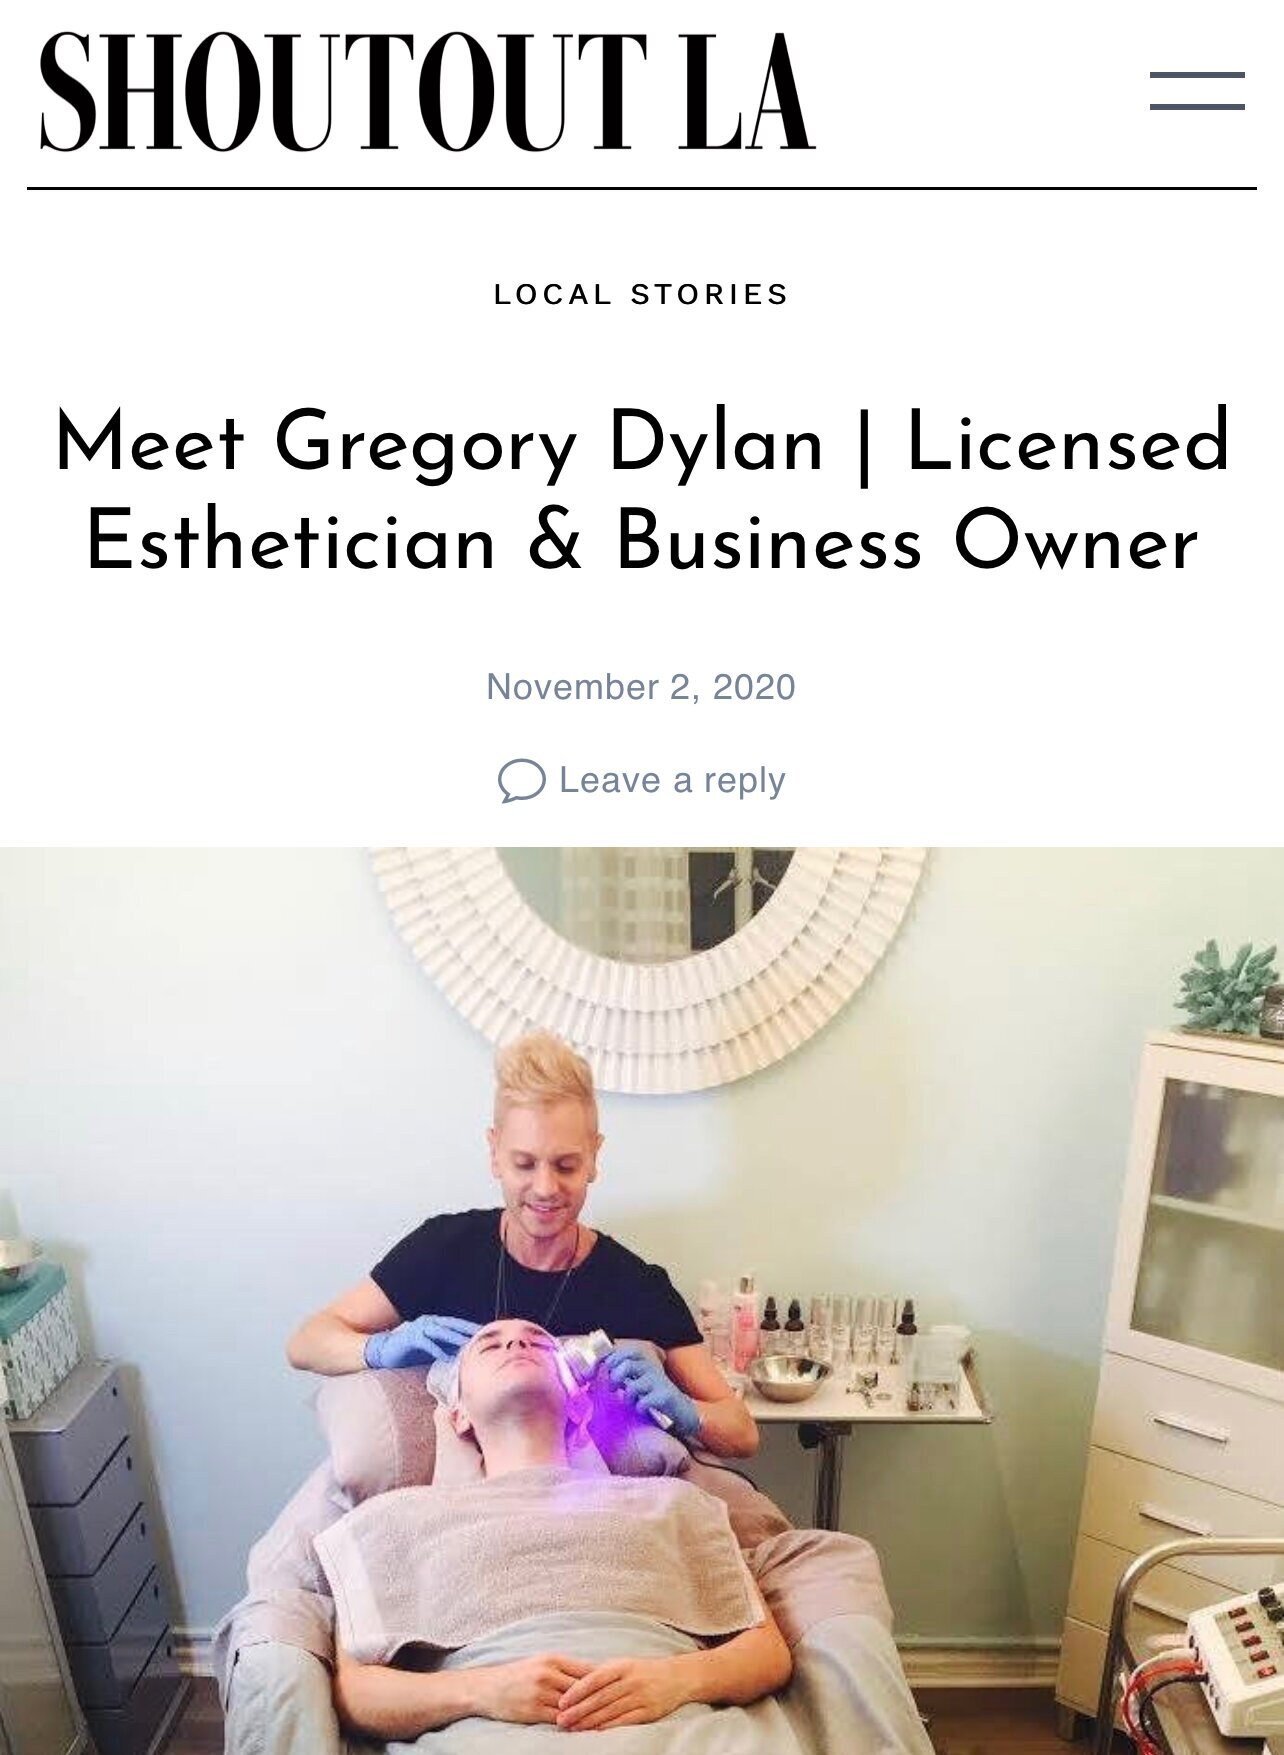 Shoutout LA | Meet Gregory Dylan, Licensed Esthetician & Business Owner